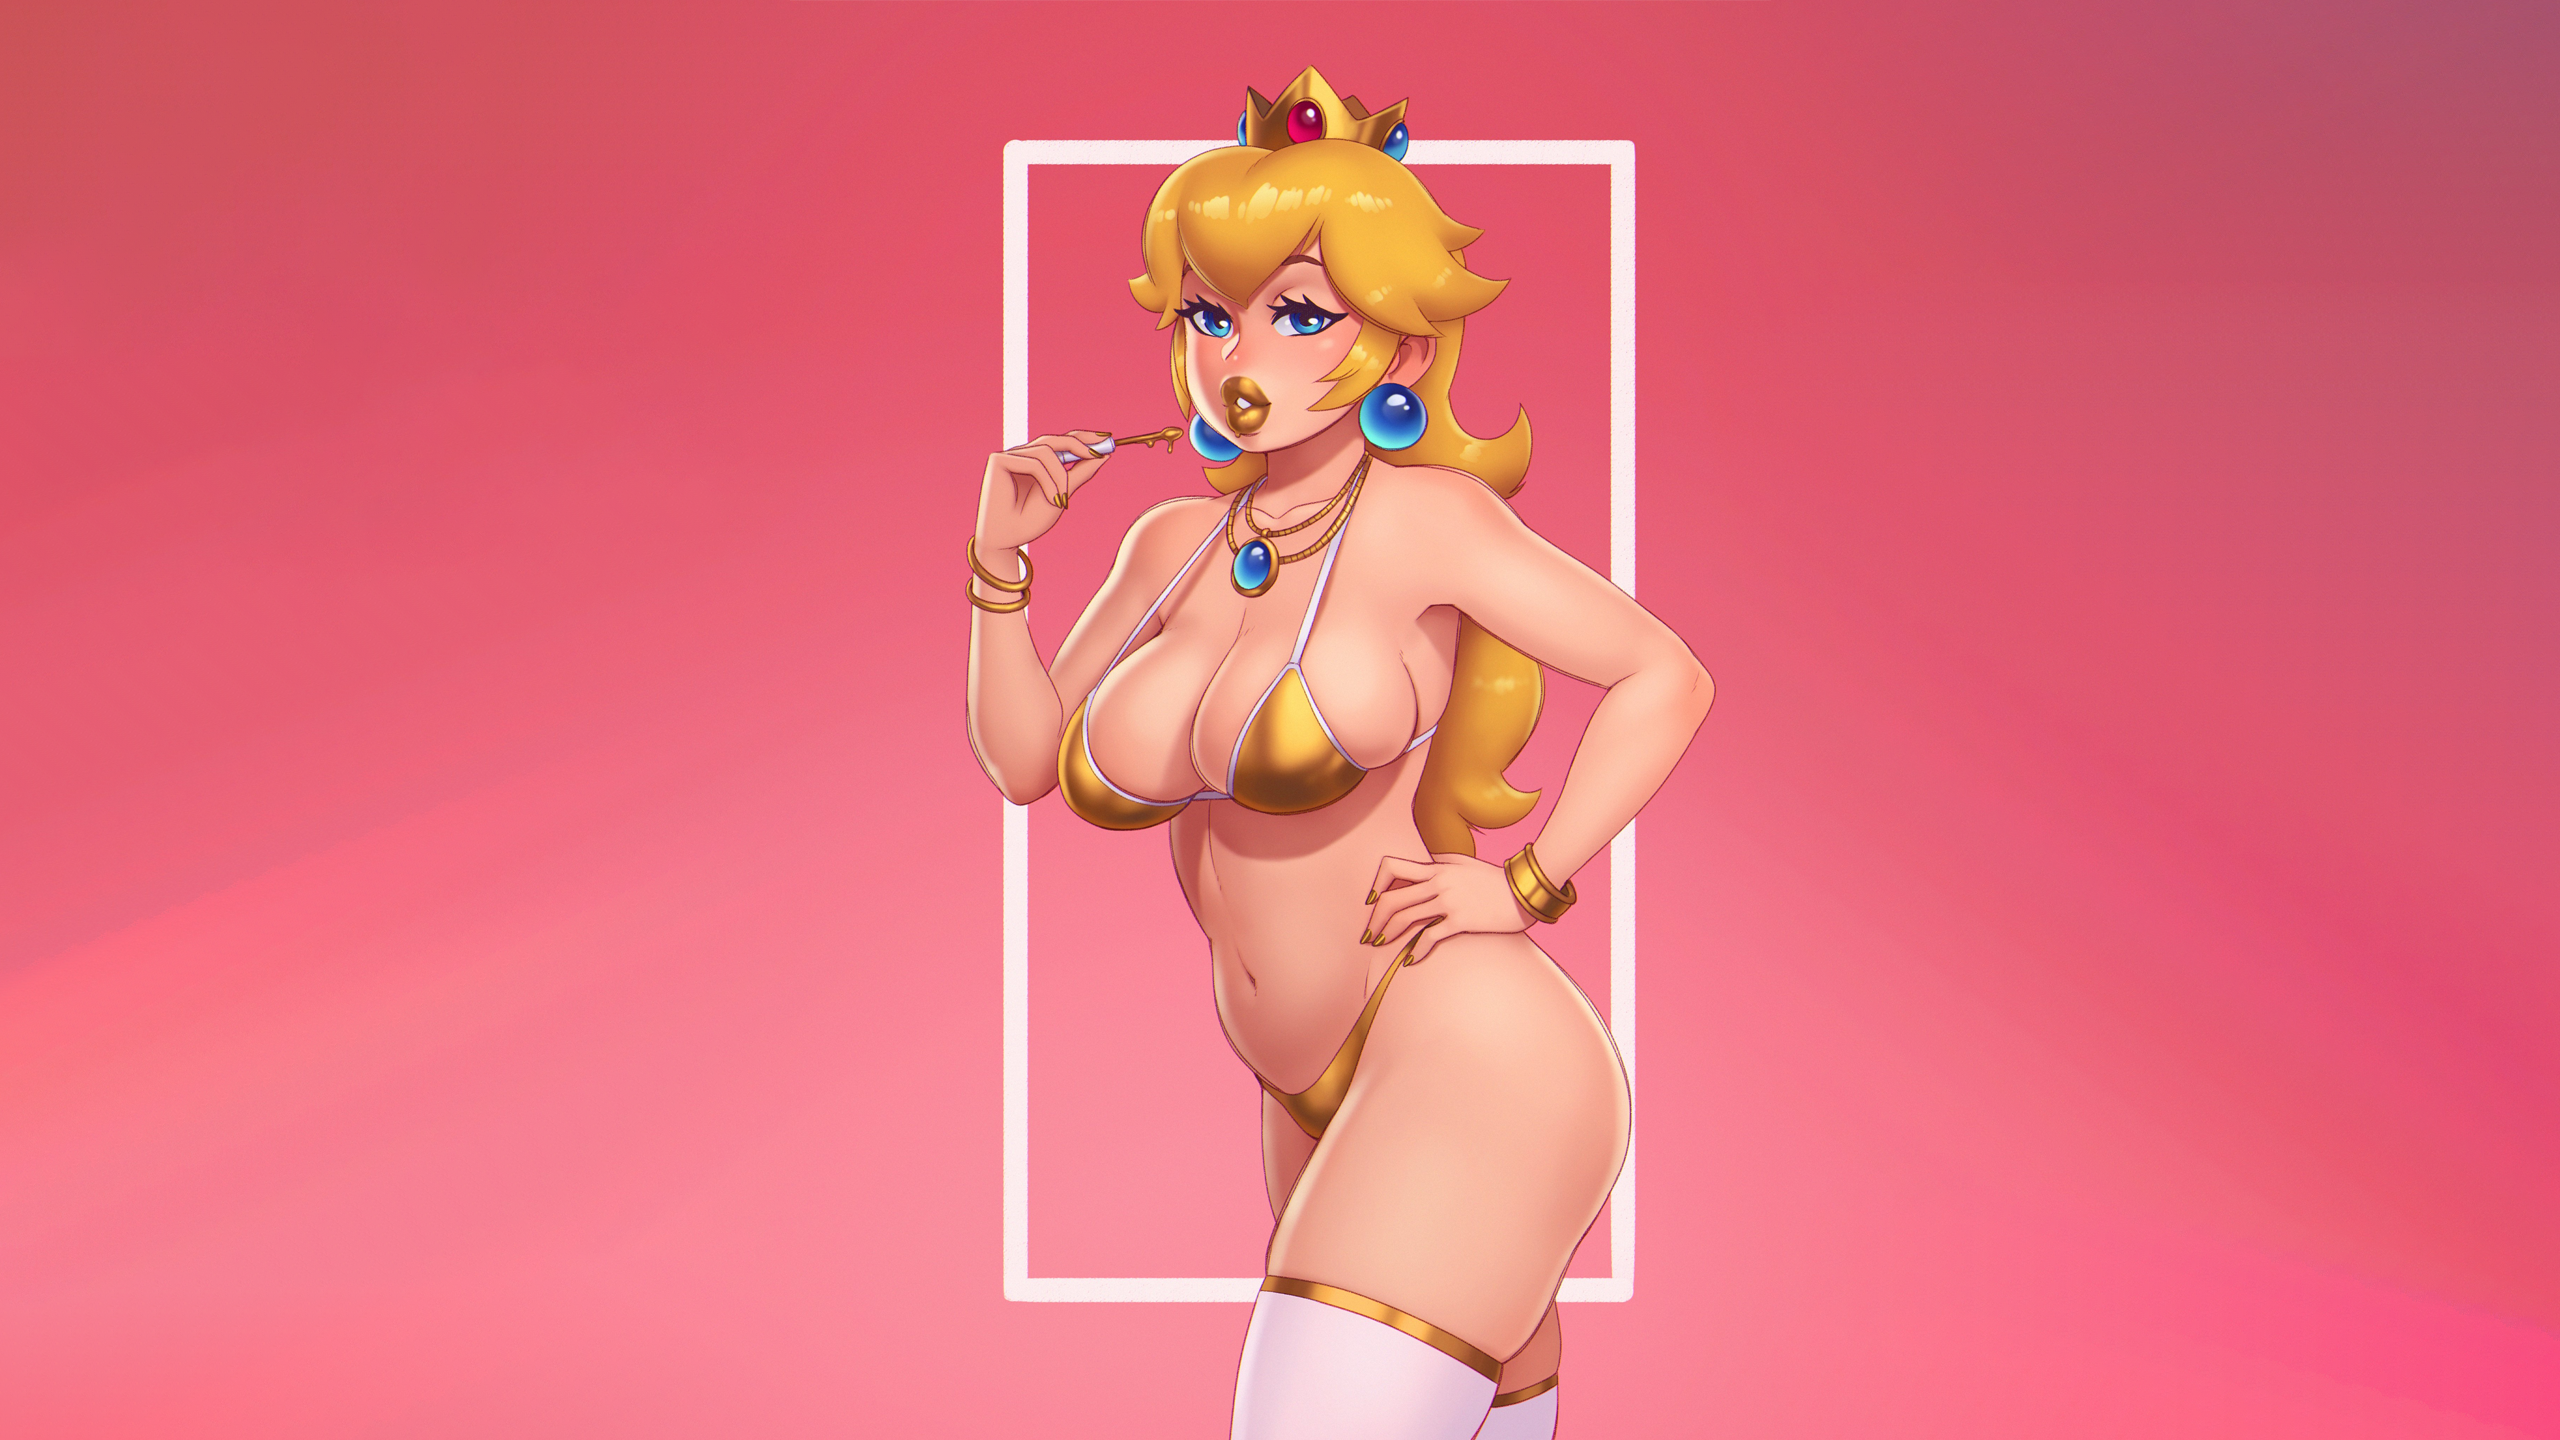 Anime 2560x1440 anime anime girls ecchi Mario Bros. thighs thigh-highs stockings Rizdraws Princess Peach